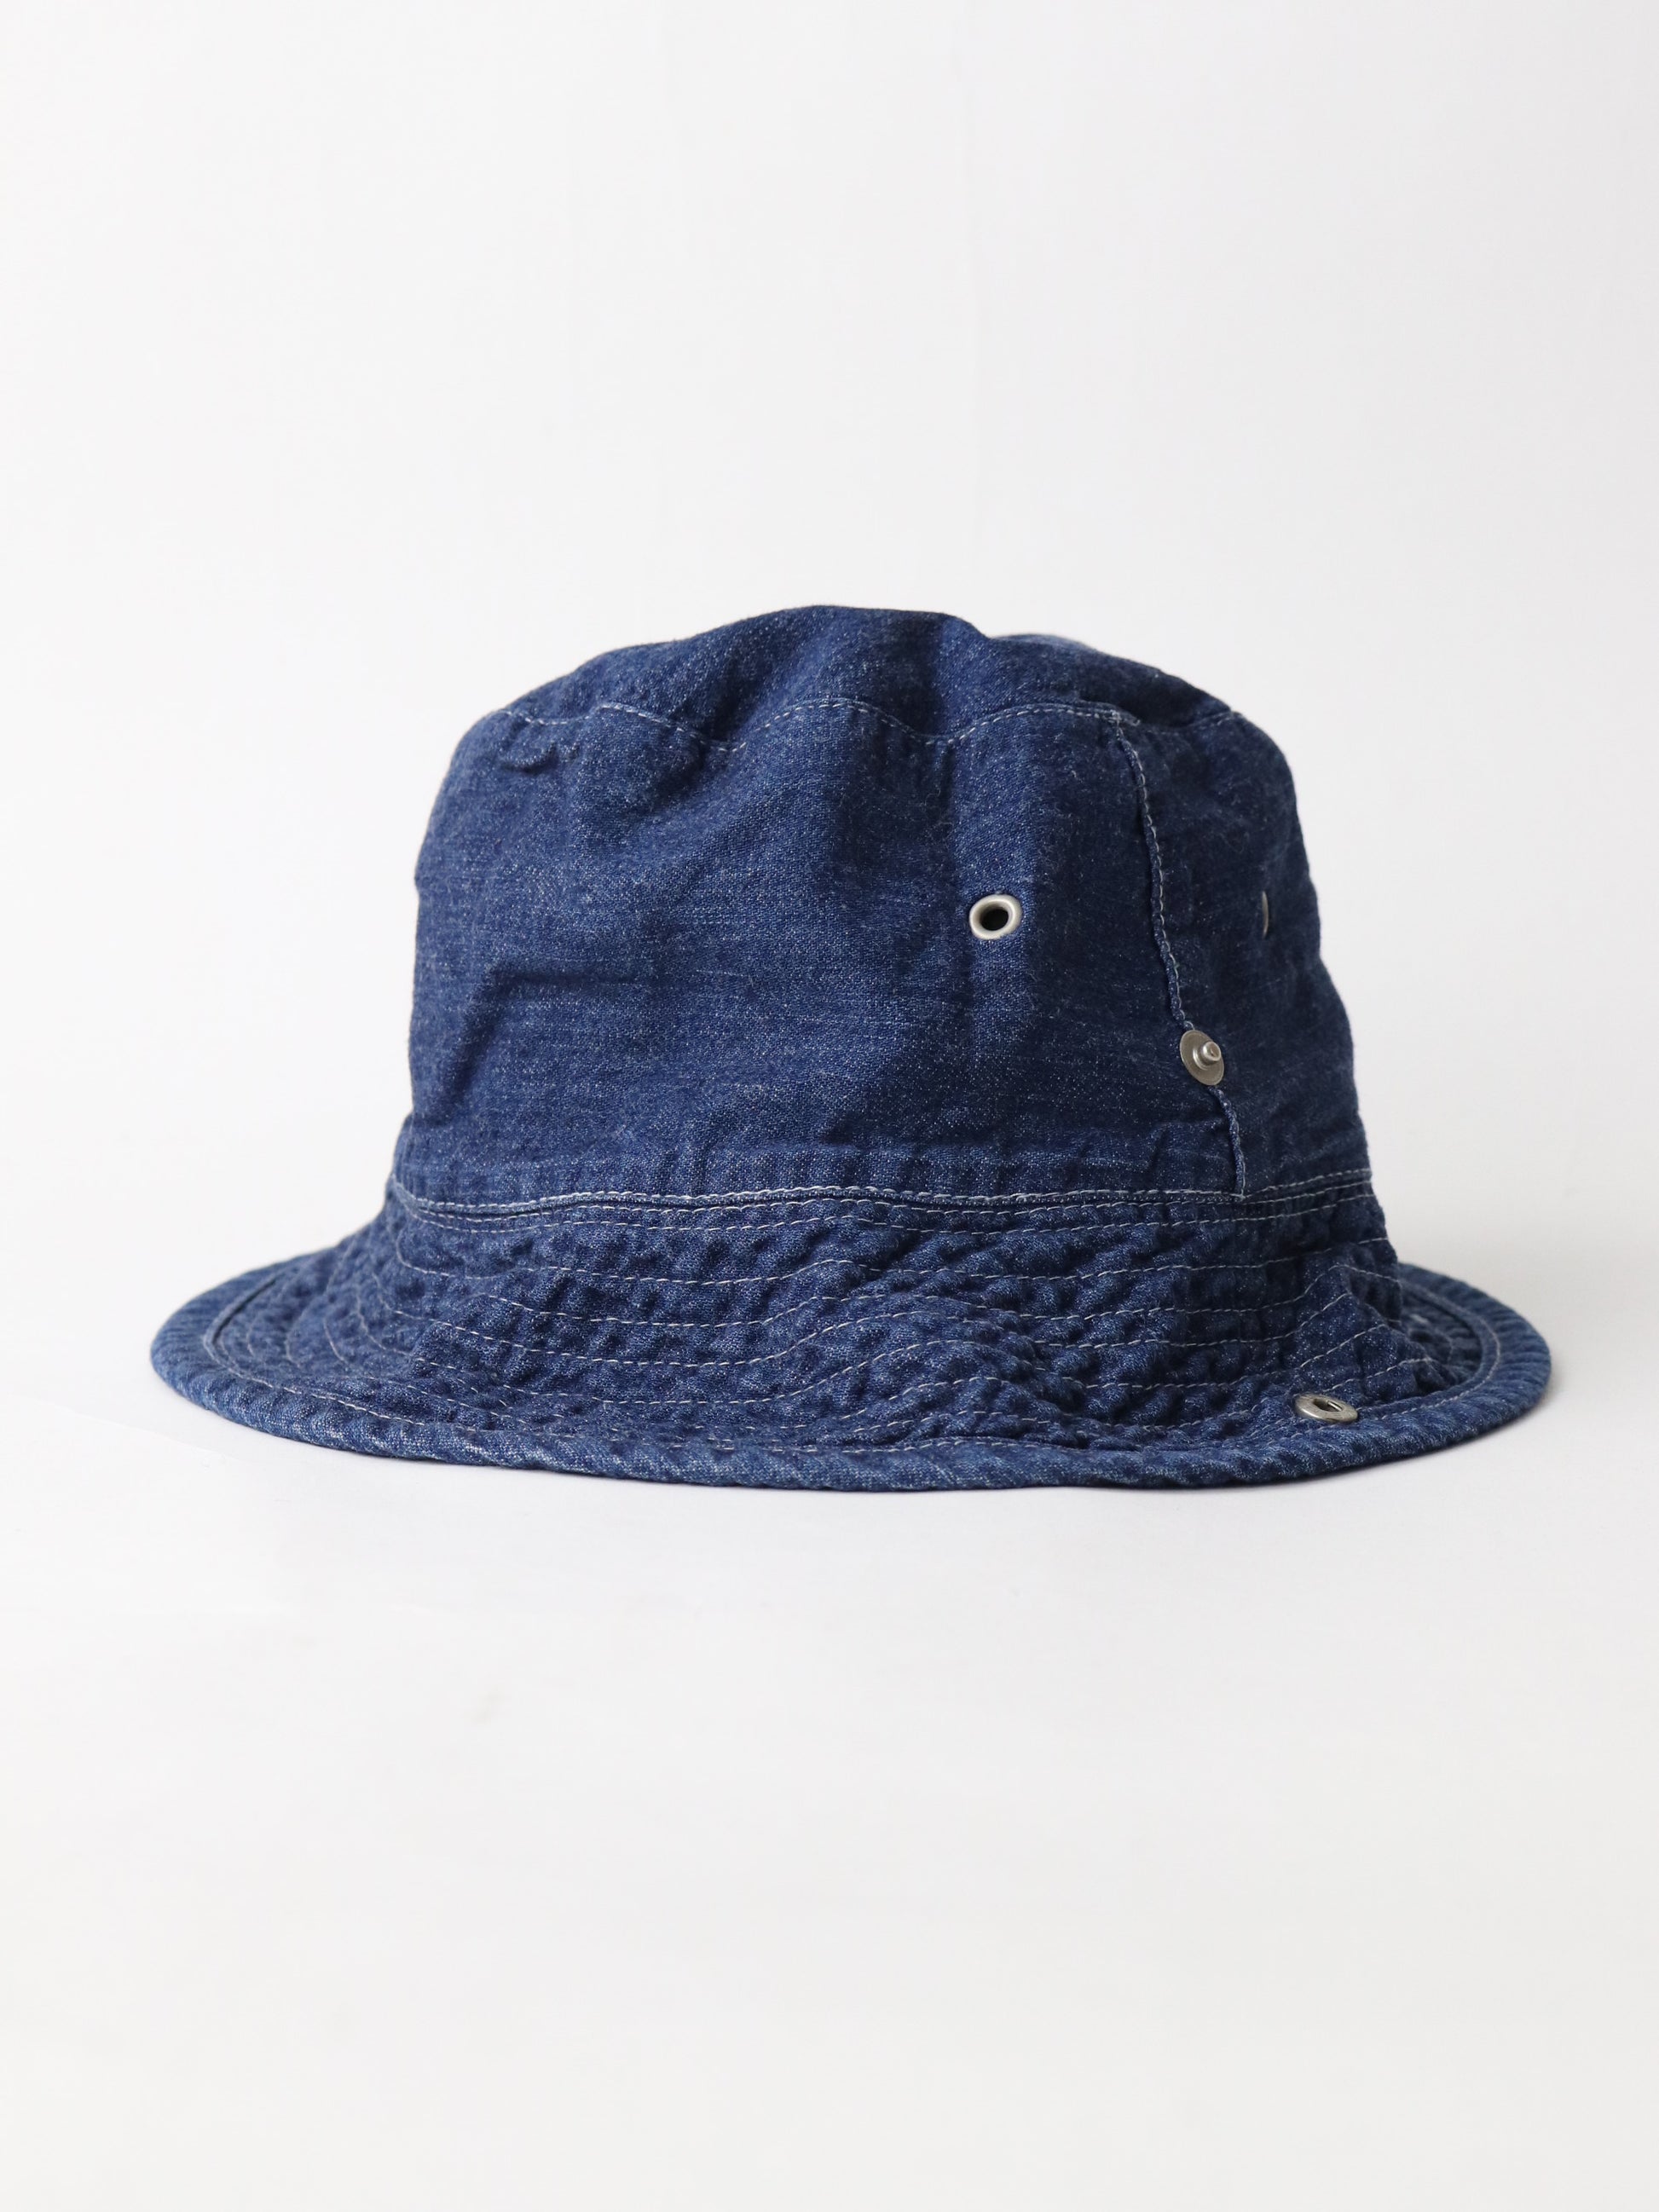 Vintage Gap Bucket Hat Cap Adult Medium Blue Denim